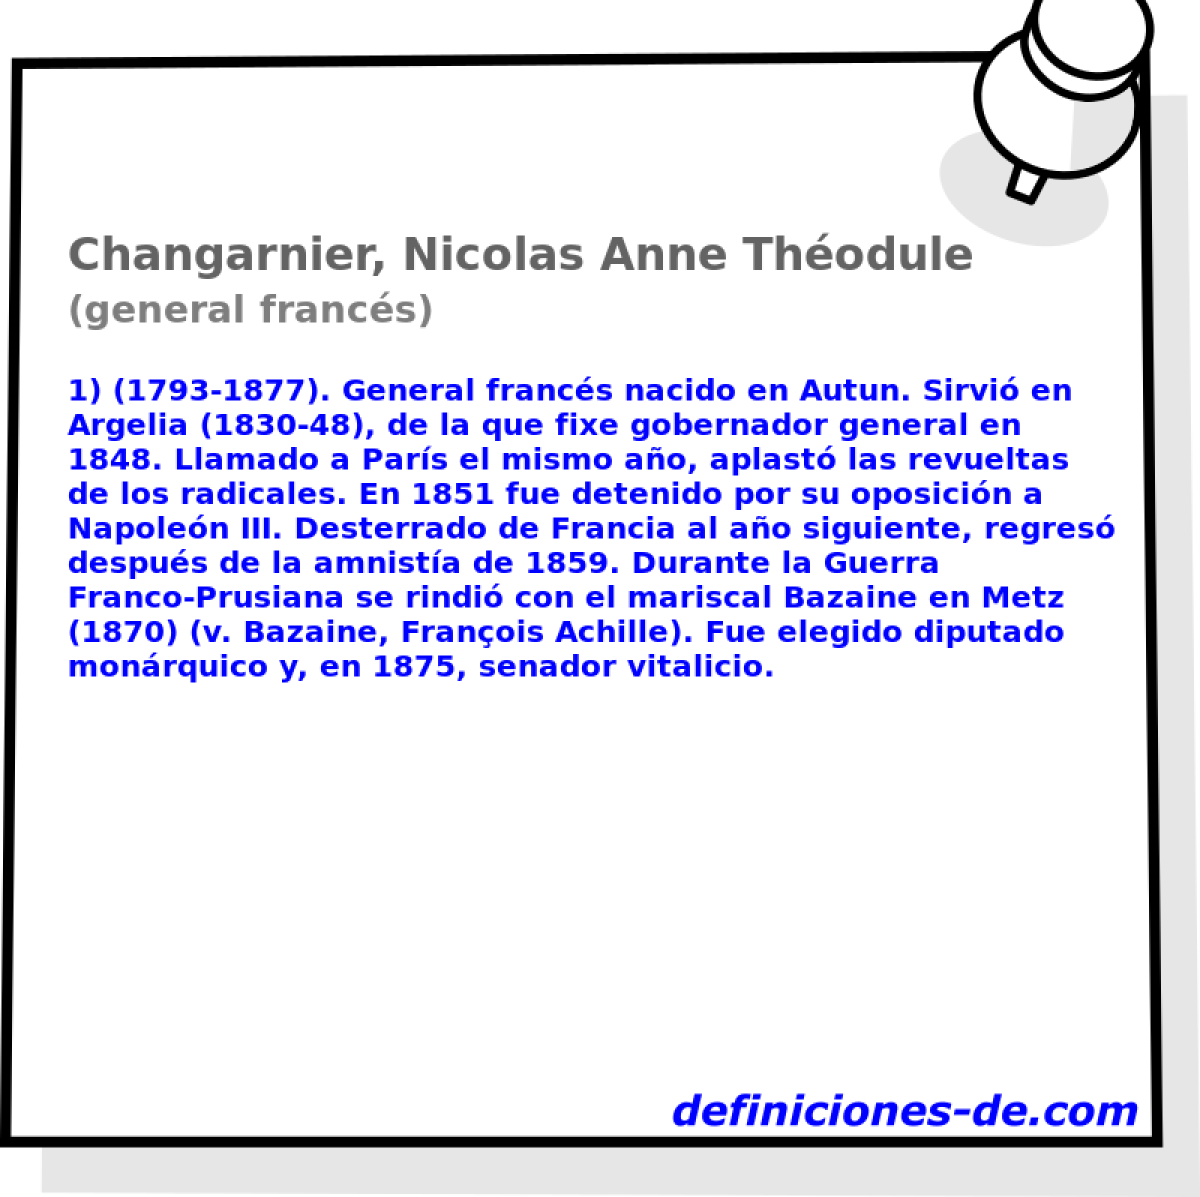 Changarnier, Nicolas Anne Thodule (general francs)